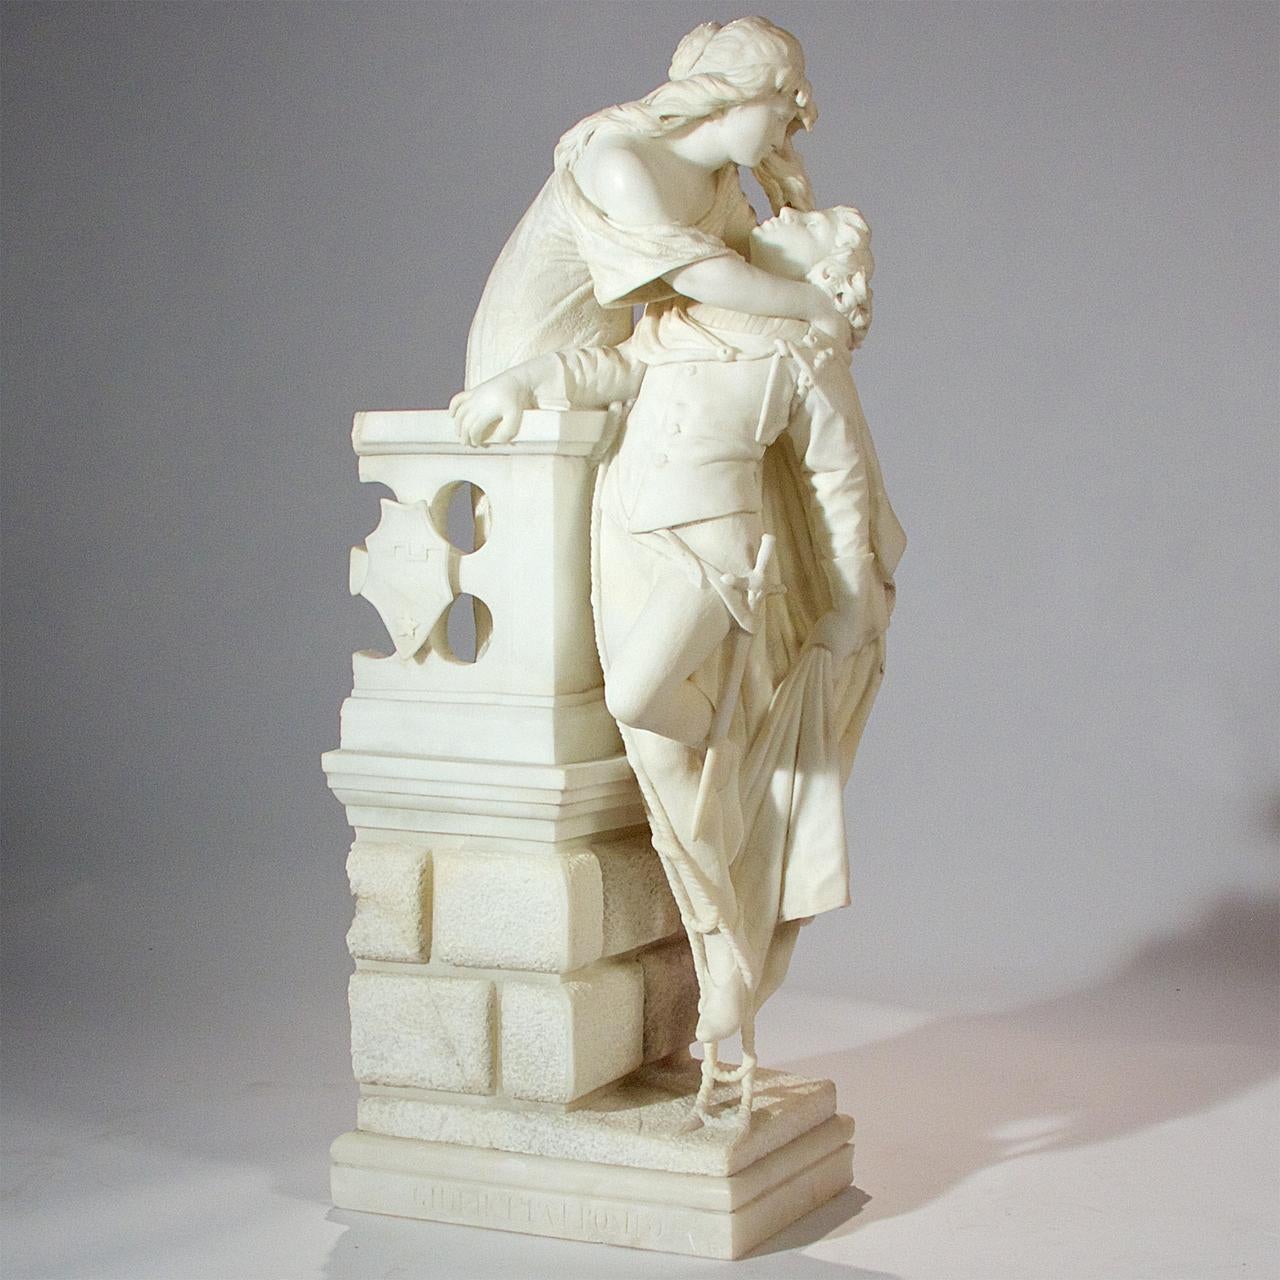 Romeo and Juliet - Sculpture by Ferdinando Vichi